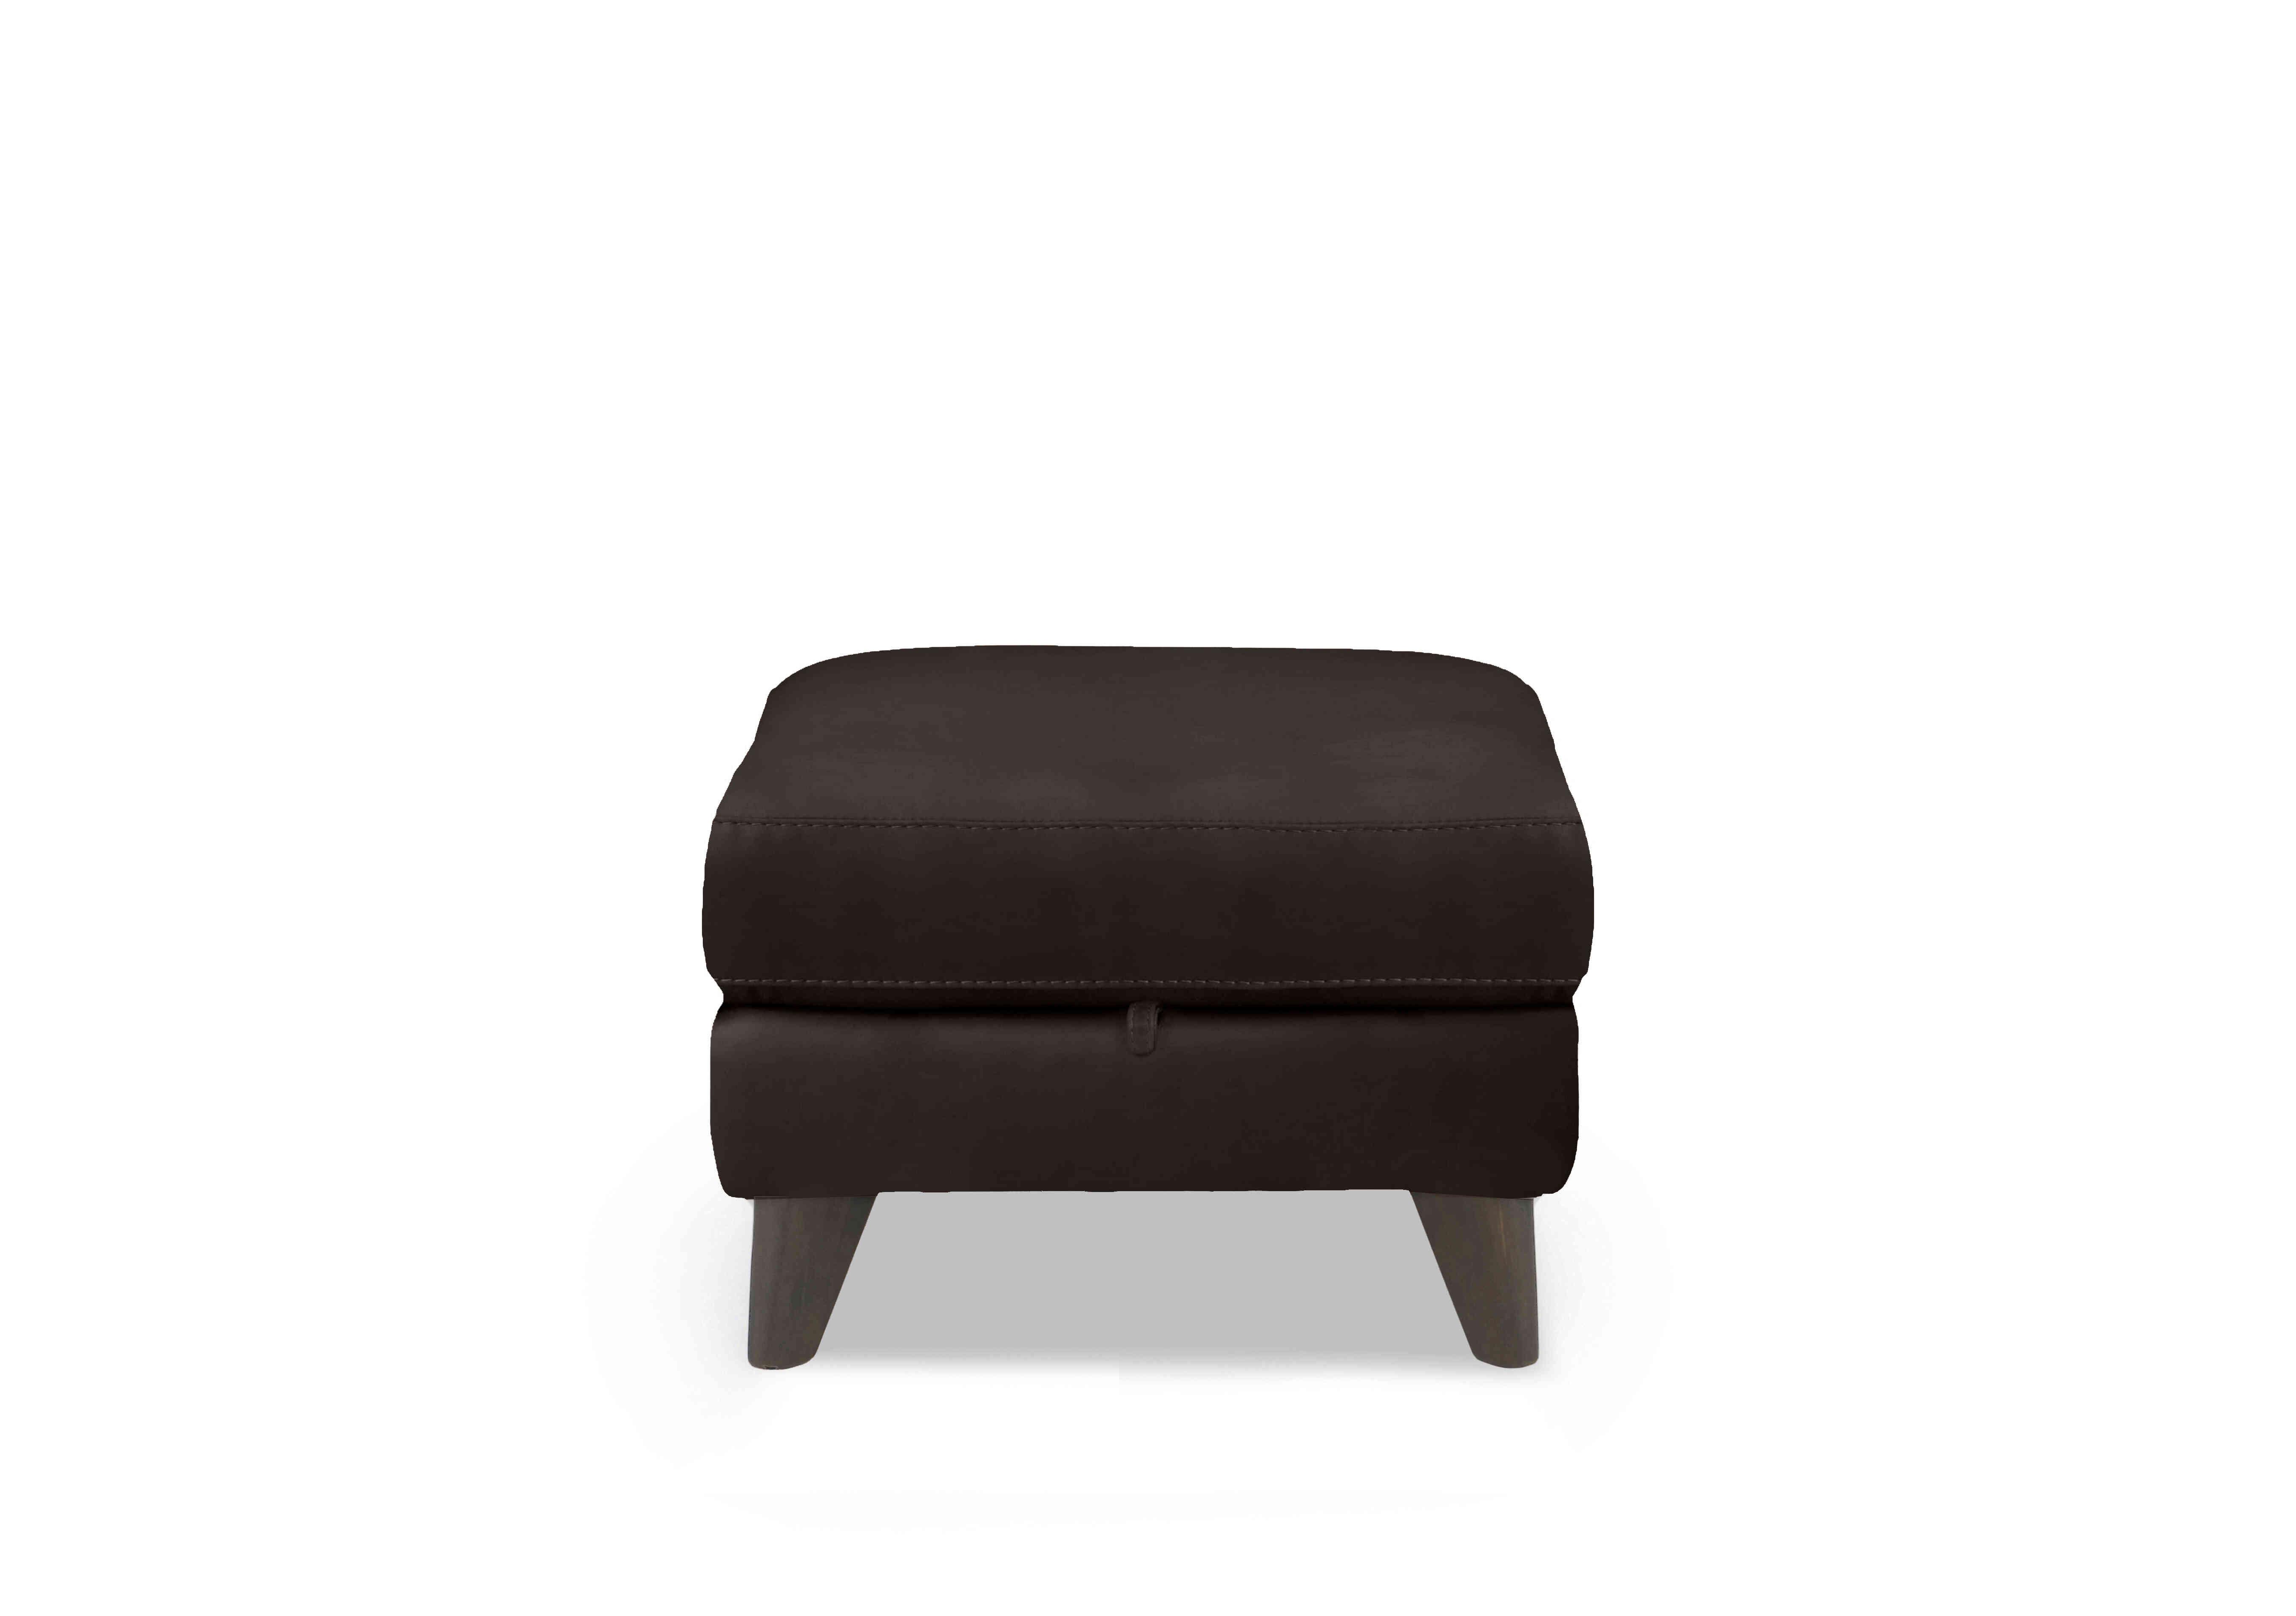 Wade Leather Storage Footstool in Bv-1748 Dark Chocolate on Furniture Village